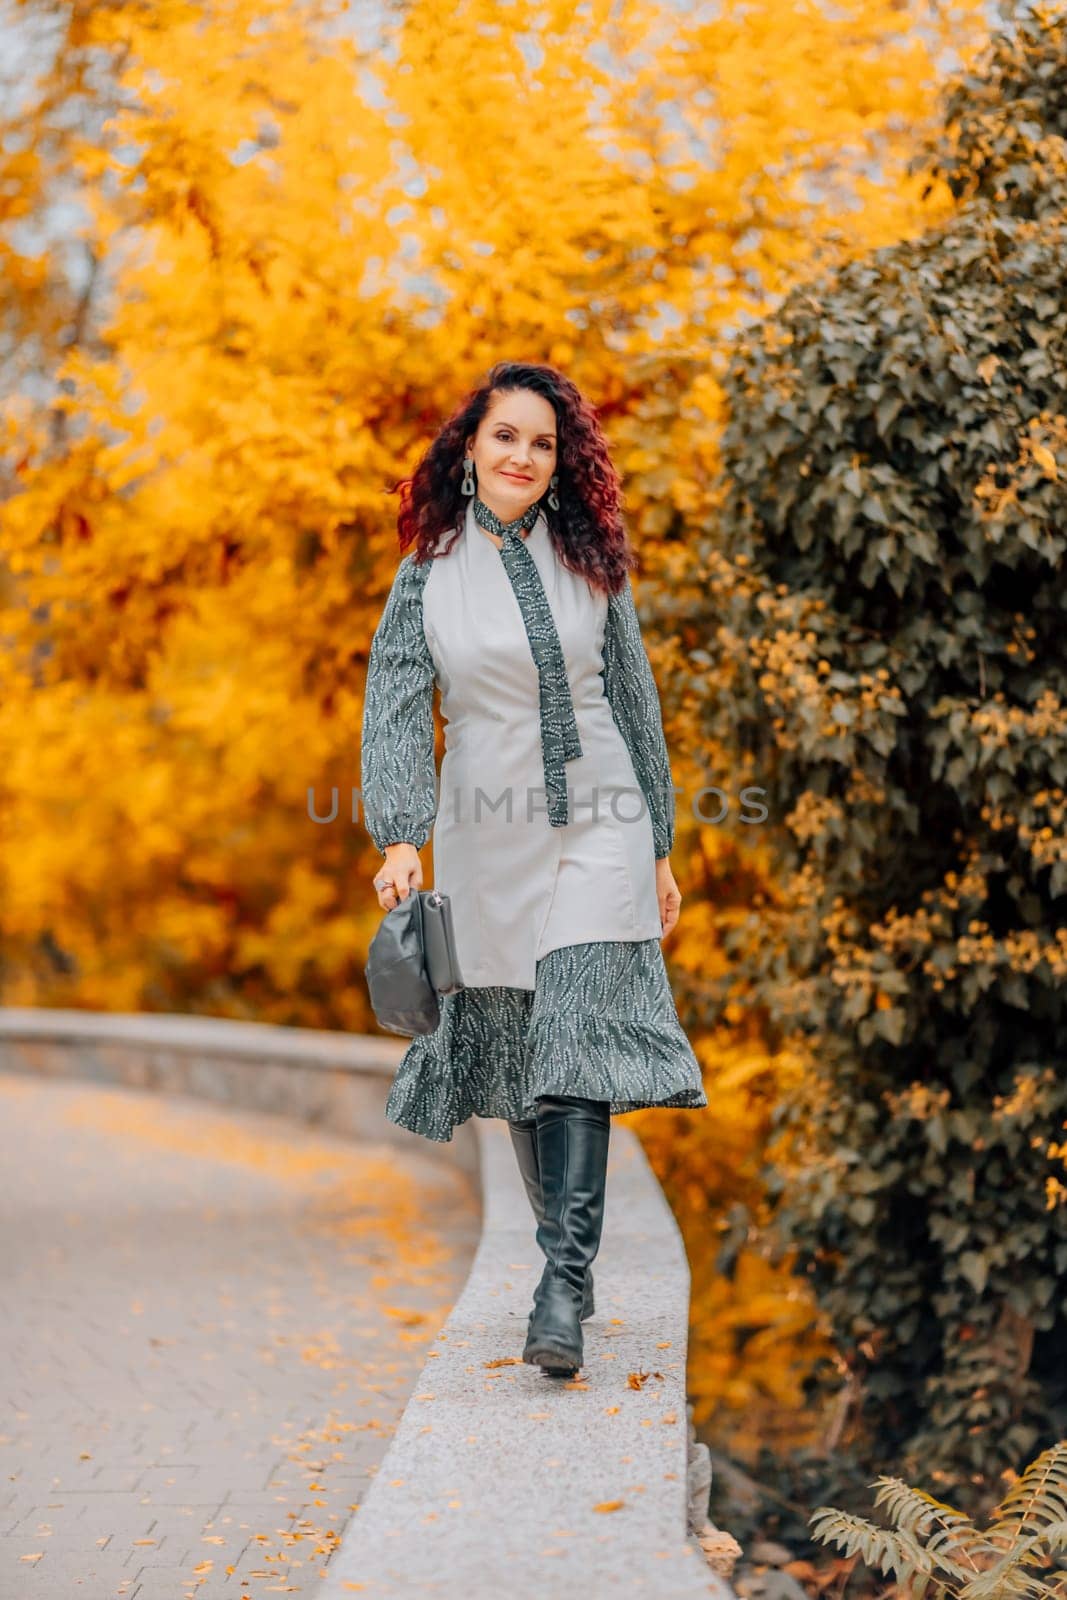 A woman walks outdoors in autumn, enjoys the autumn weather